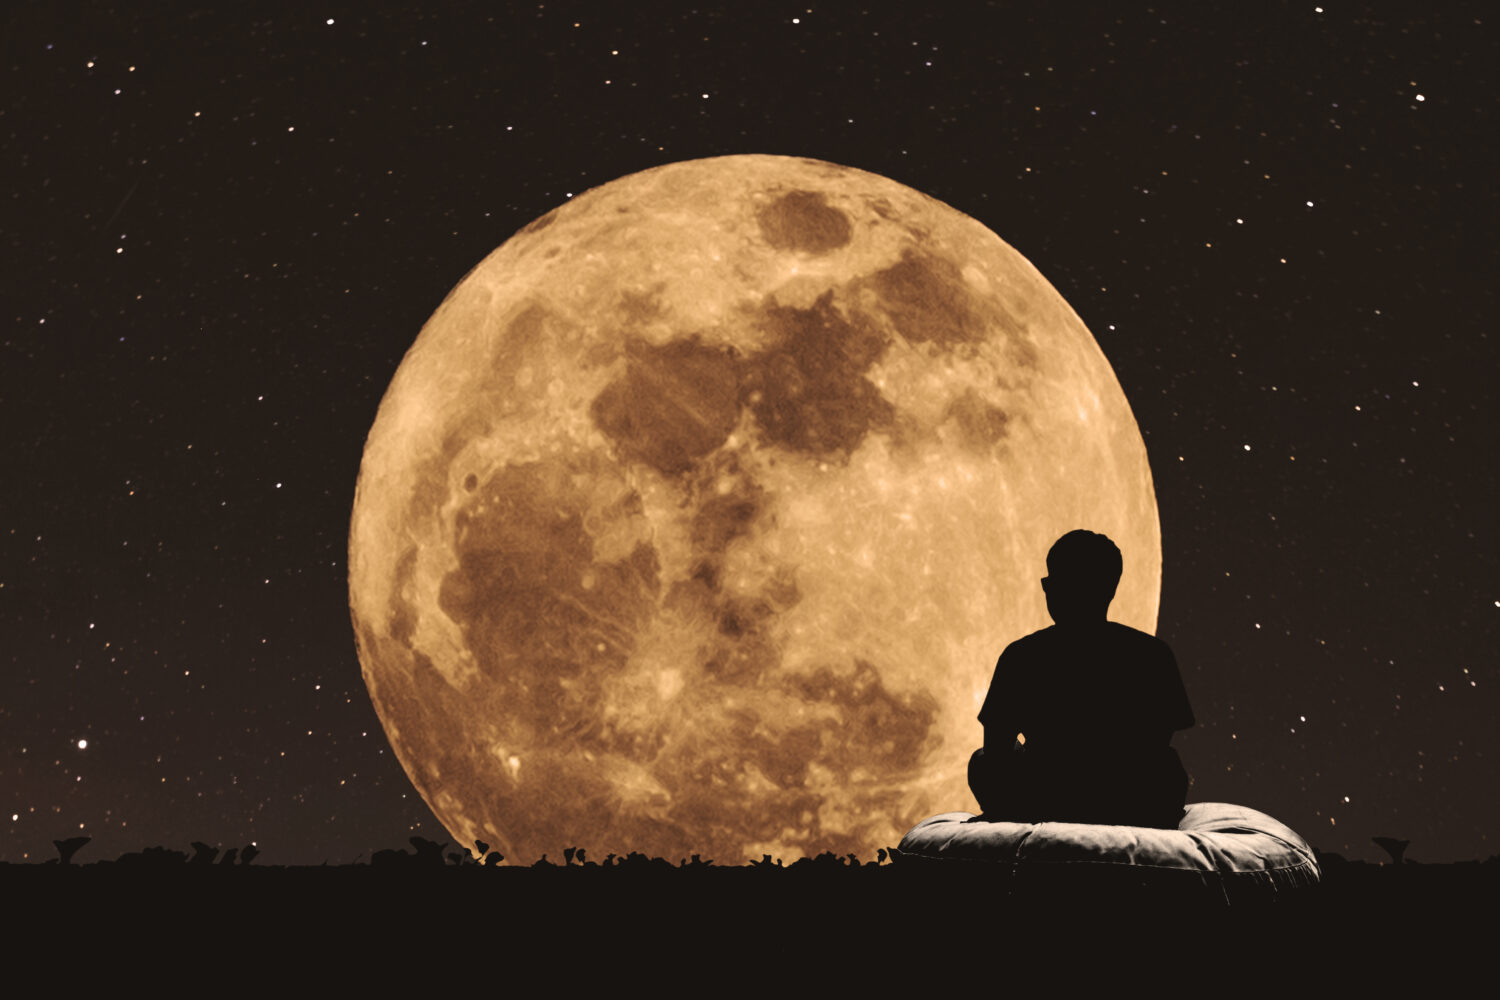 Seven hears. Back at the Moon фото. Под полной луной лост. A man looking at the Moon. Don't look at the Moon.